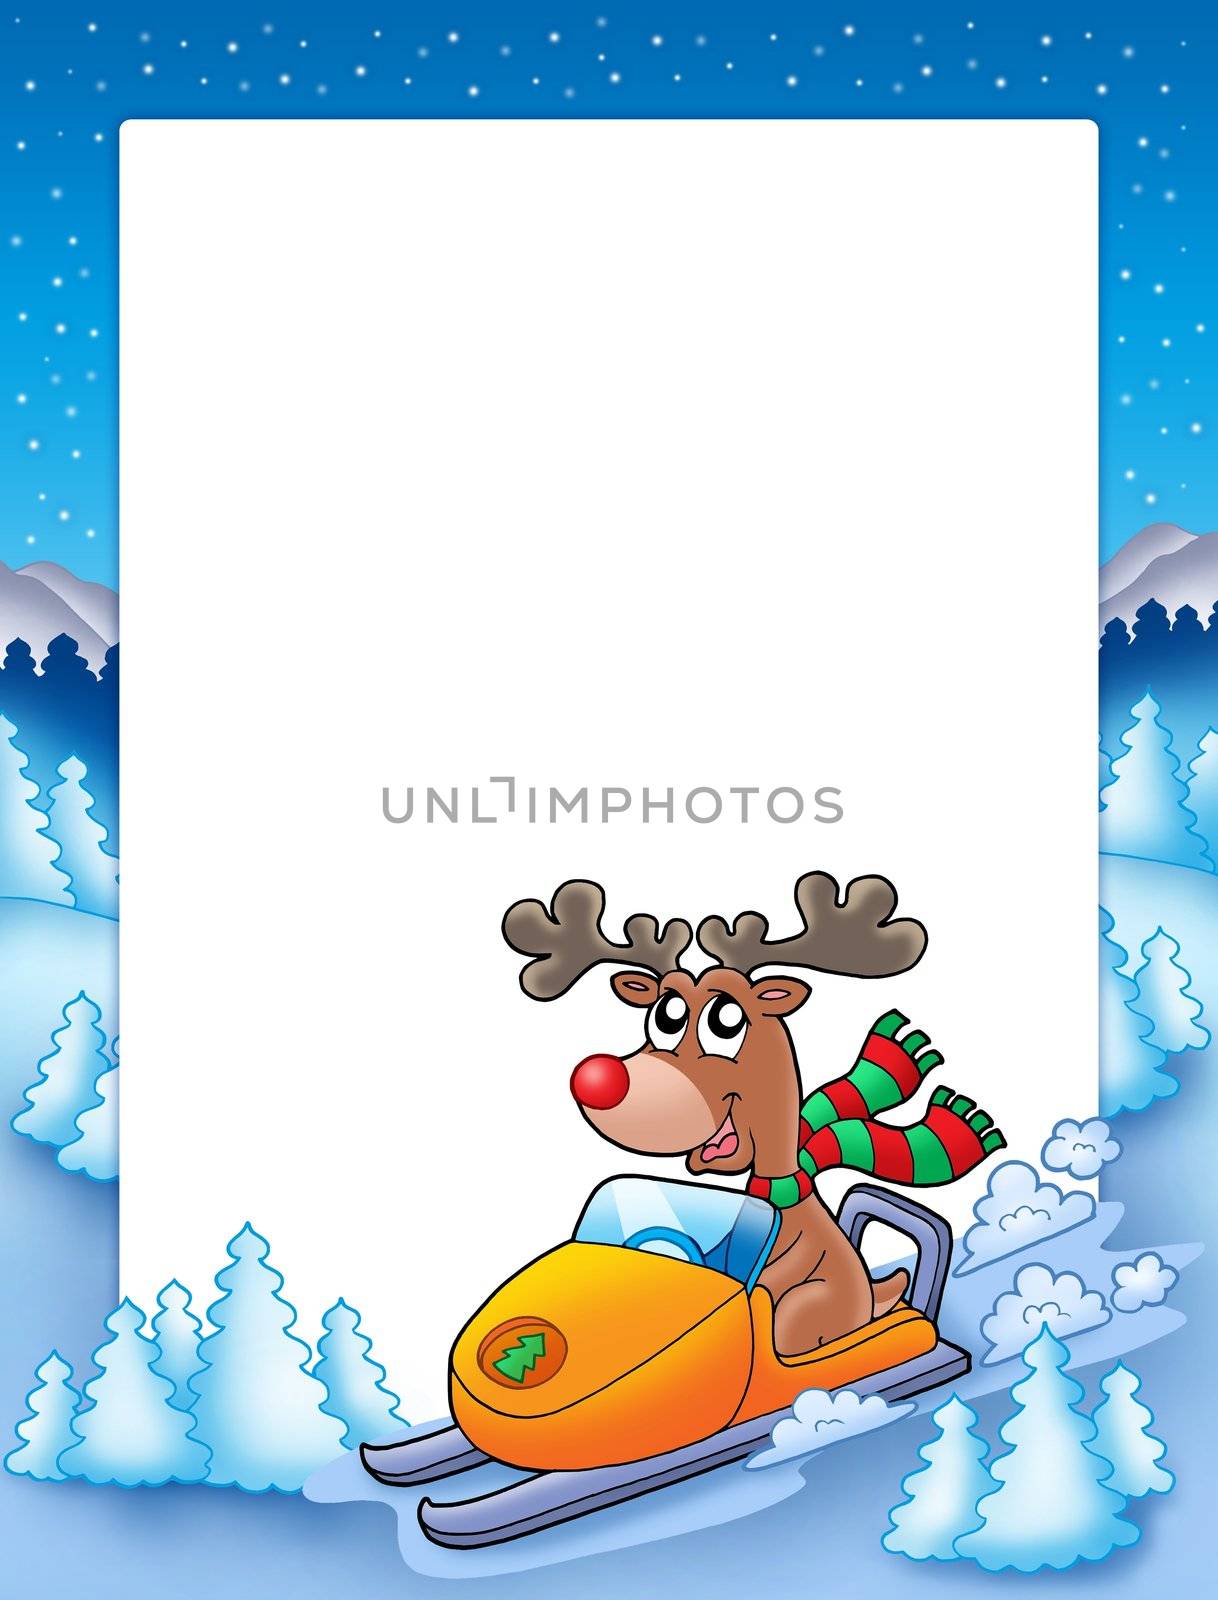 Frame with reindeer riding scooter - color illustration.